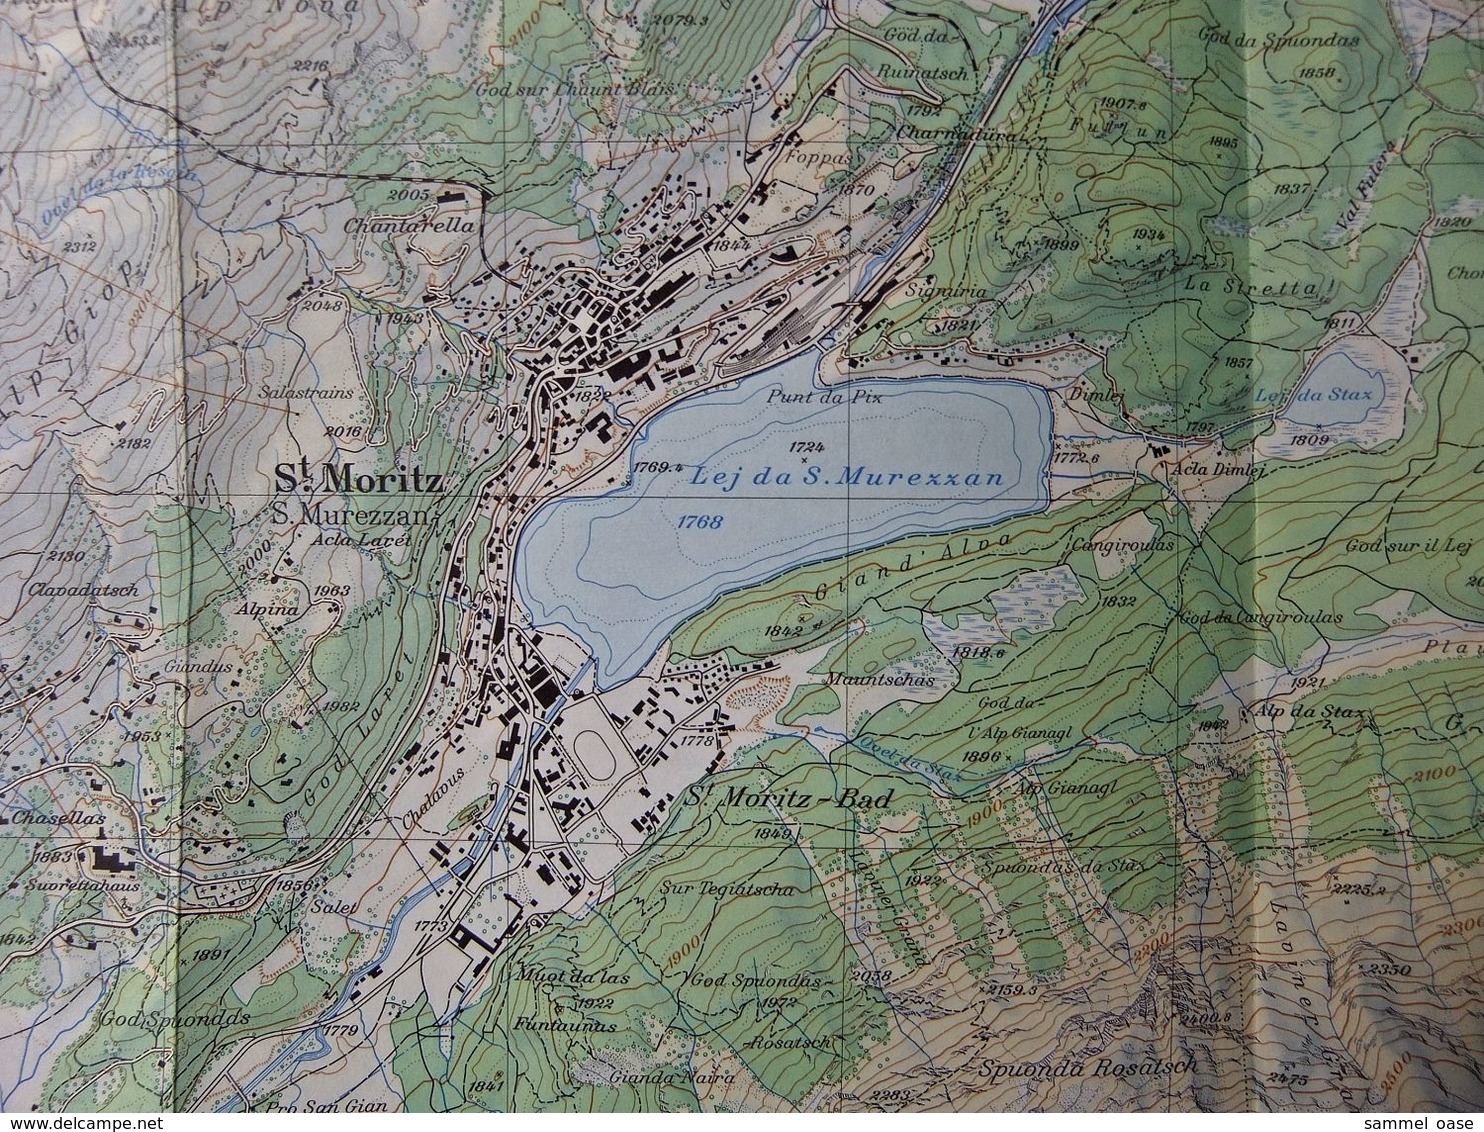 Topographische Karte / Landeskarte Der Schweiz  -  St. Moritz  - Blatt 1257  -  1:25 000  -  1958 - Mapamundis